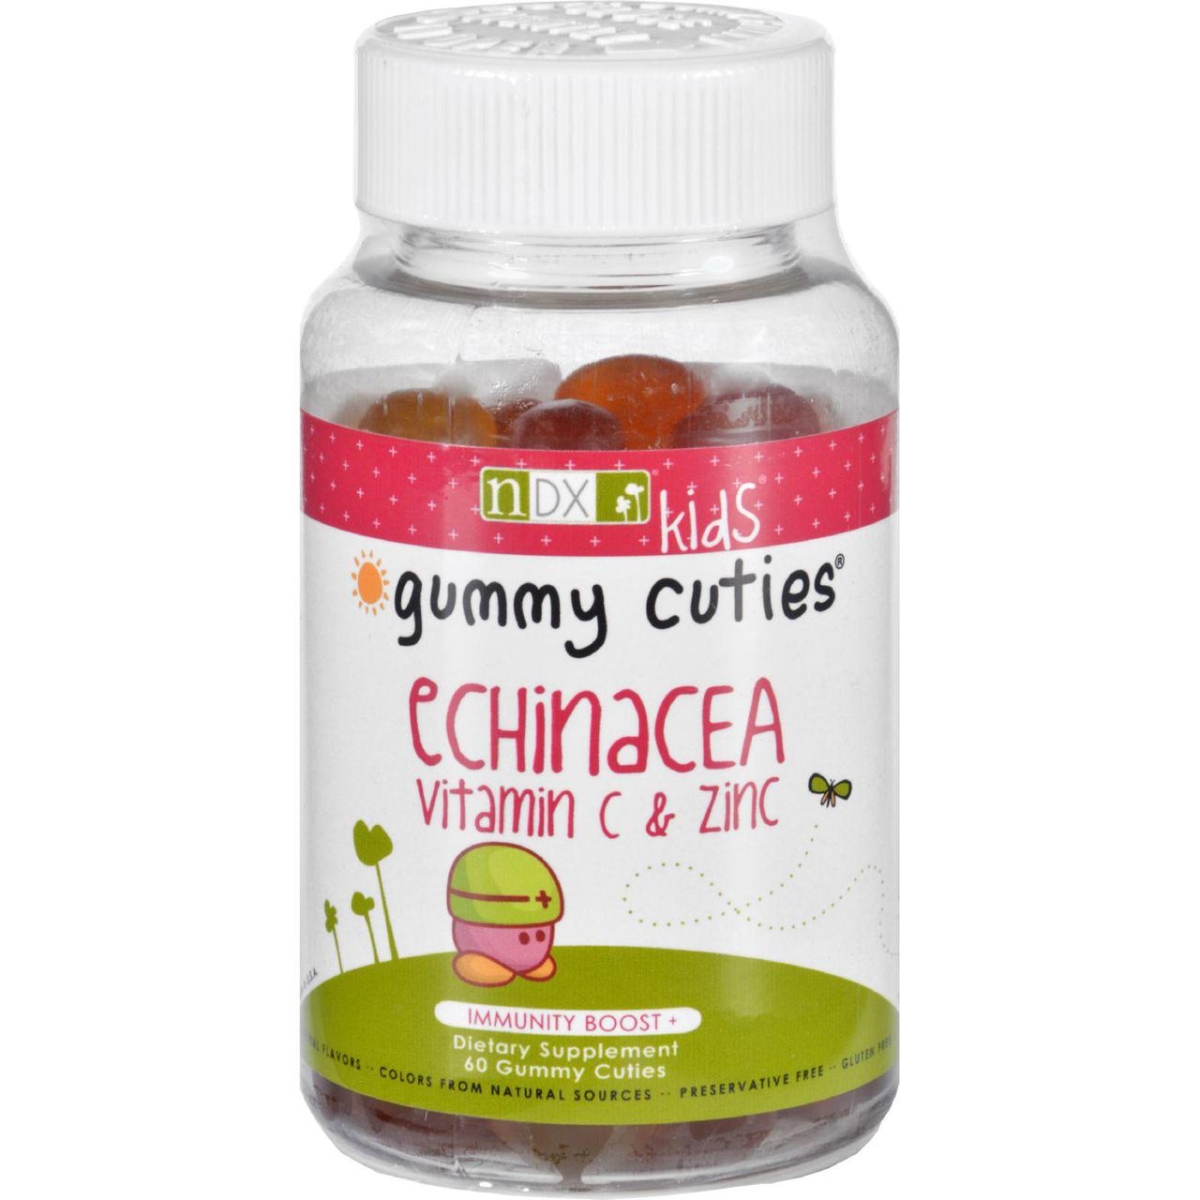 Hg1023225 Kids Echinacea Vitamin C & Zinc - 60 Gummies